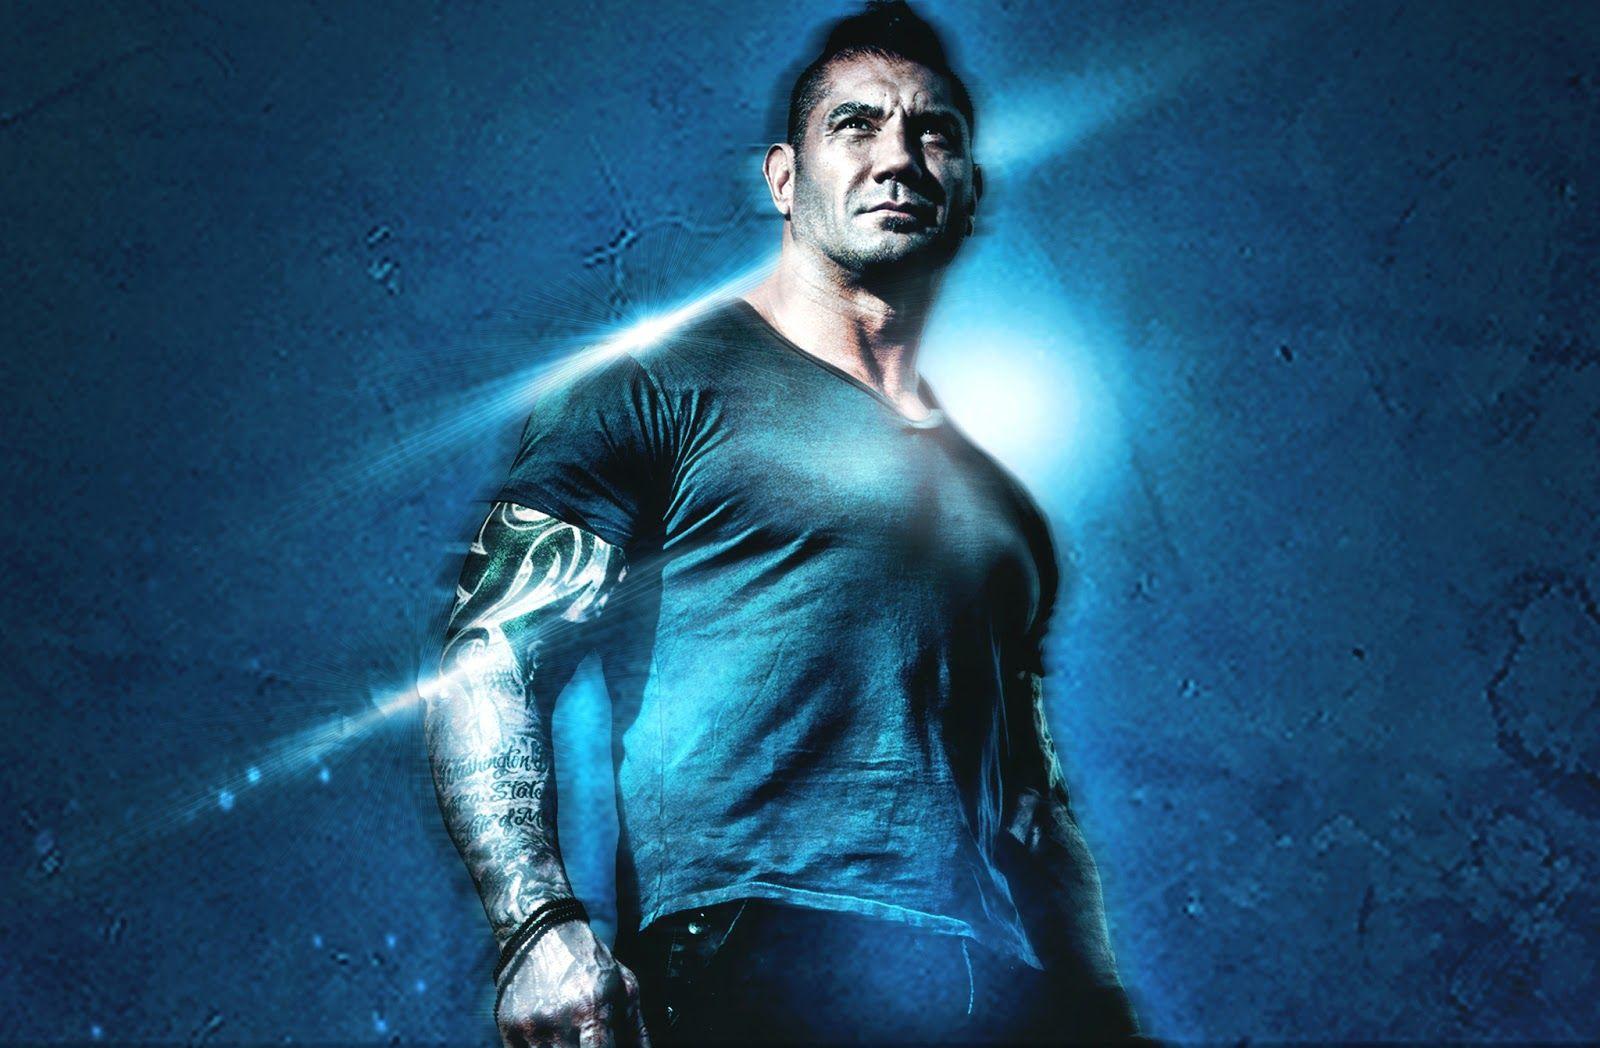 WWE Superstar Batista HD Wallpapers | Craziest Photo Collection